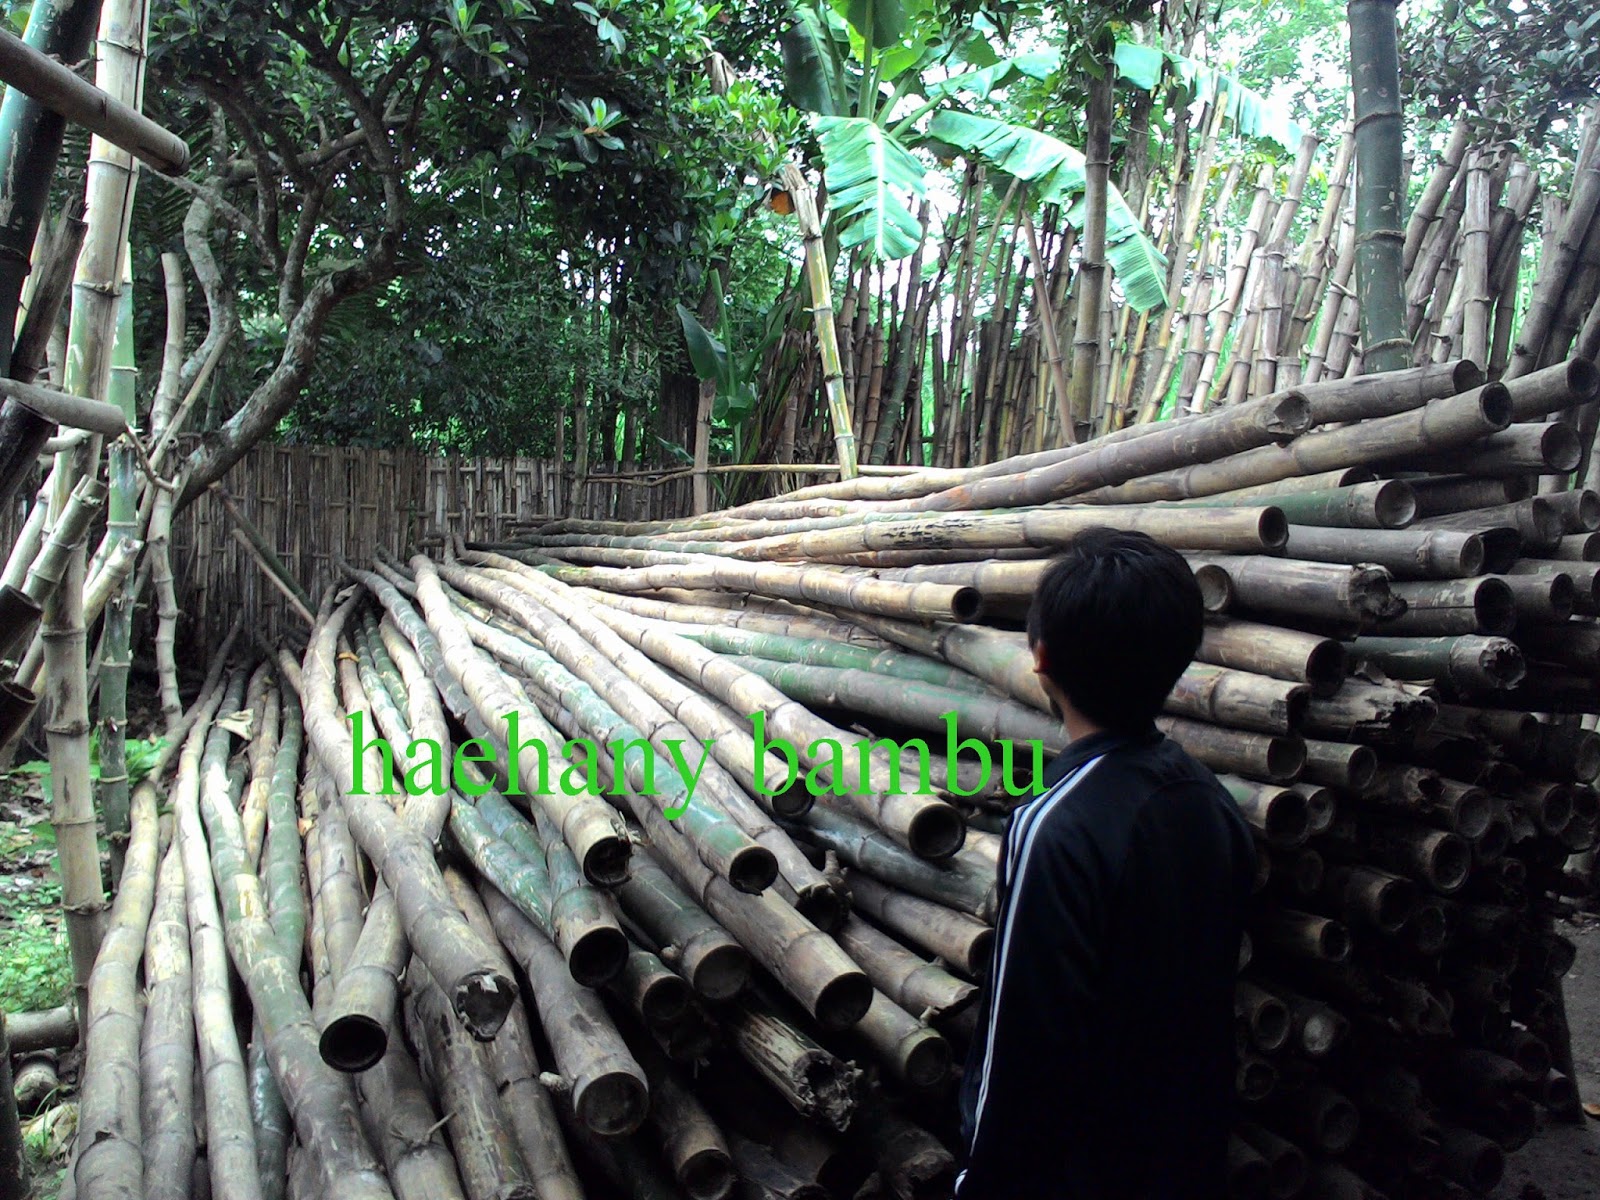 haehany jualan jual  bambu  surabaya